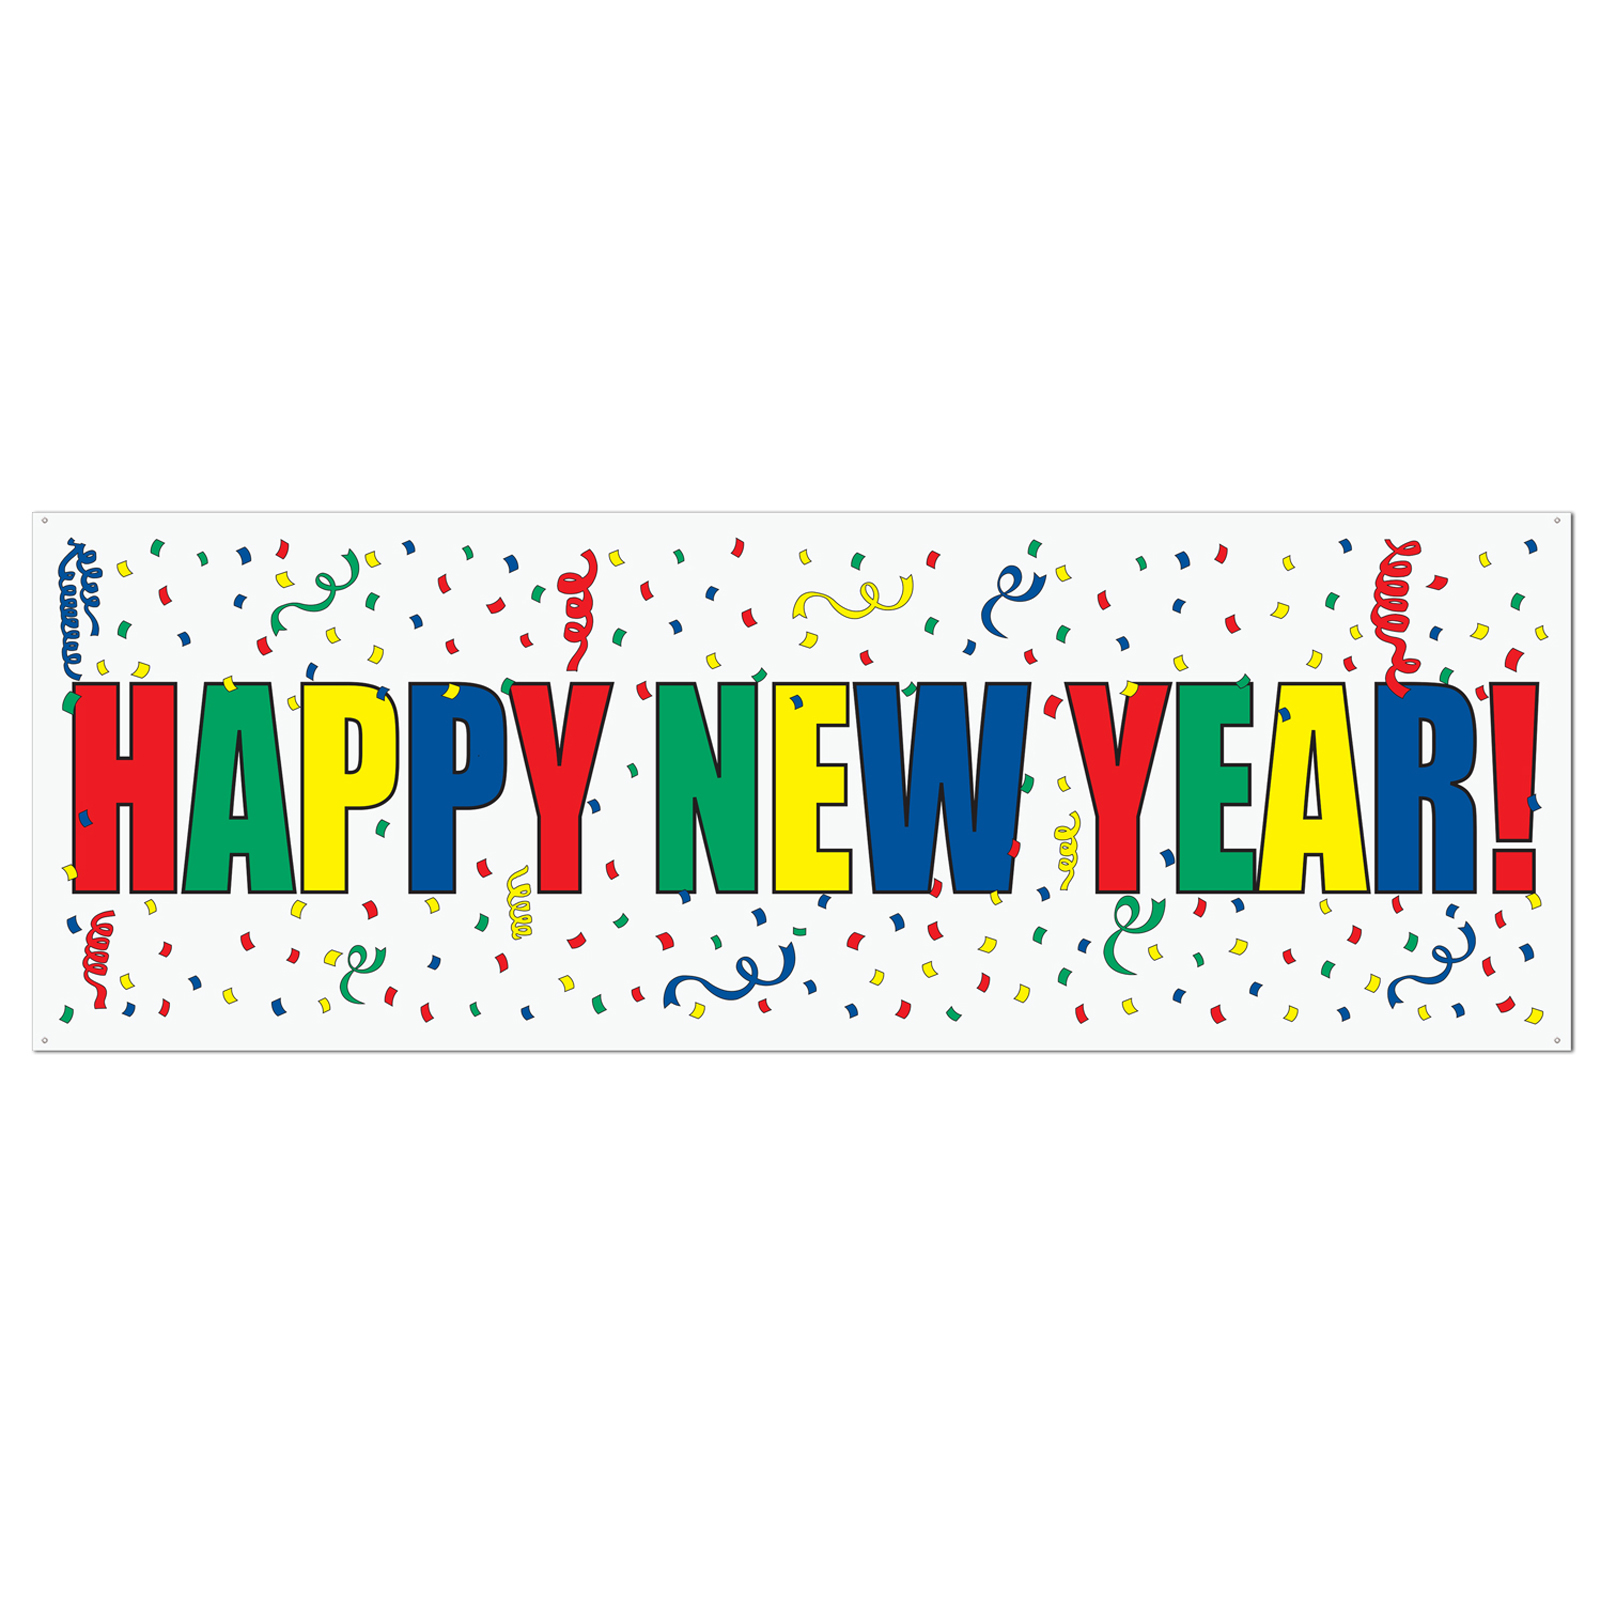 clip art happy new year banner - photo #16